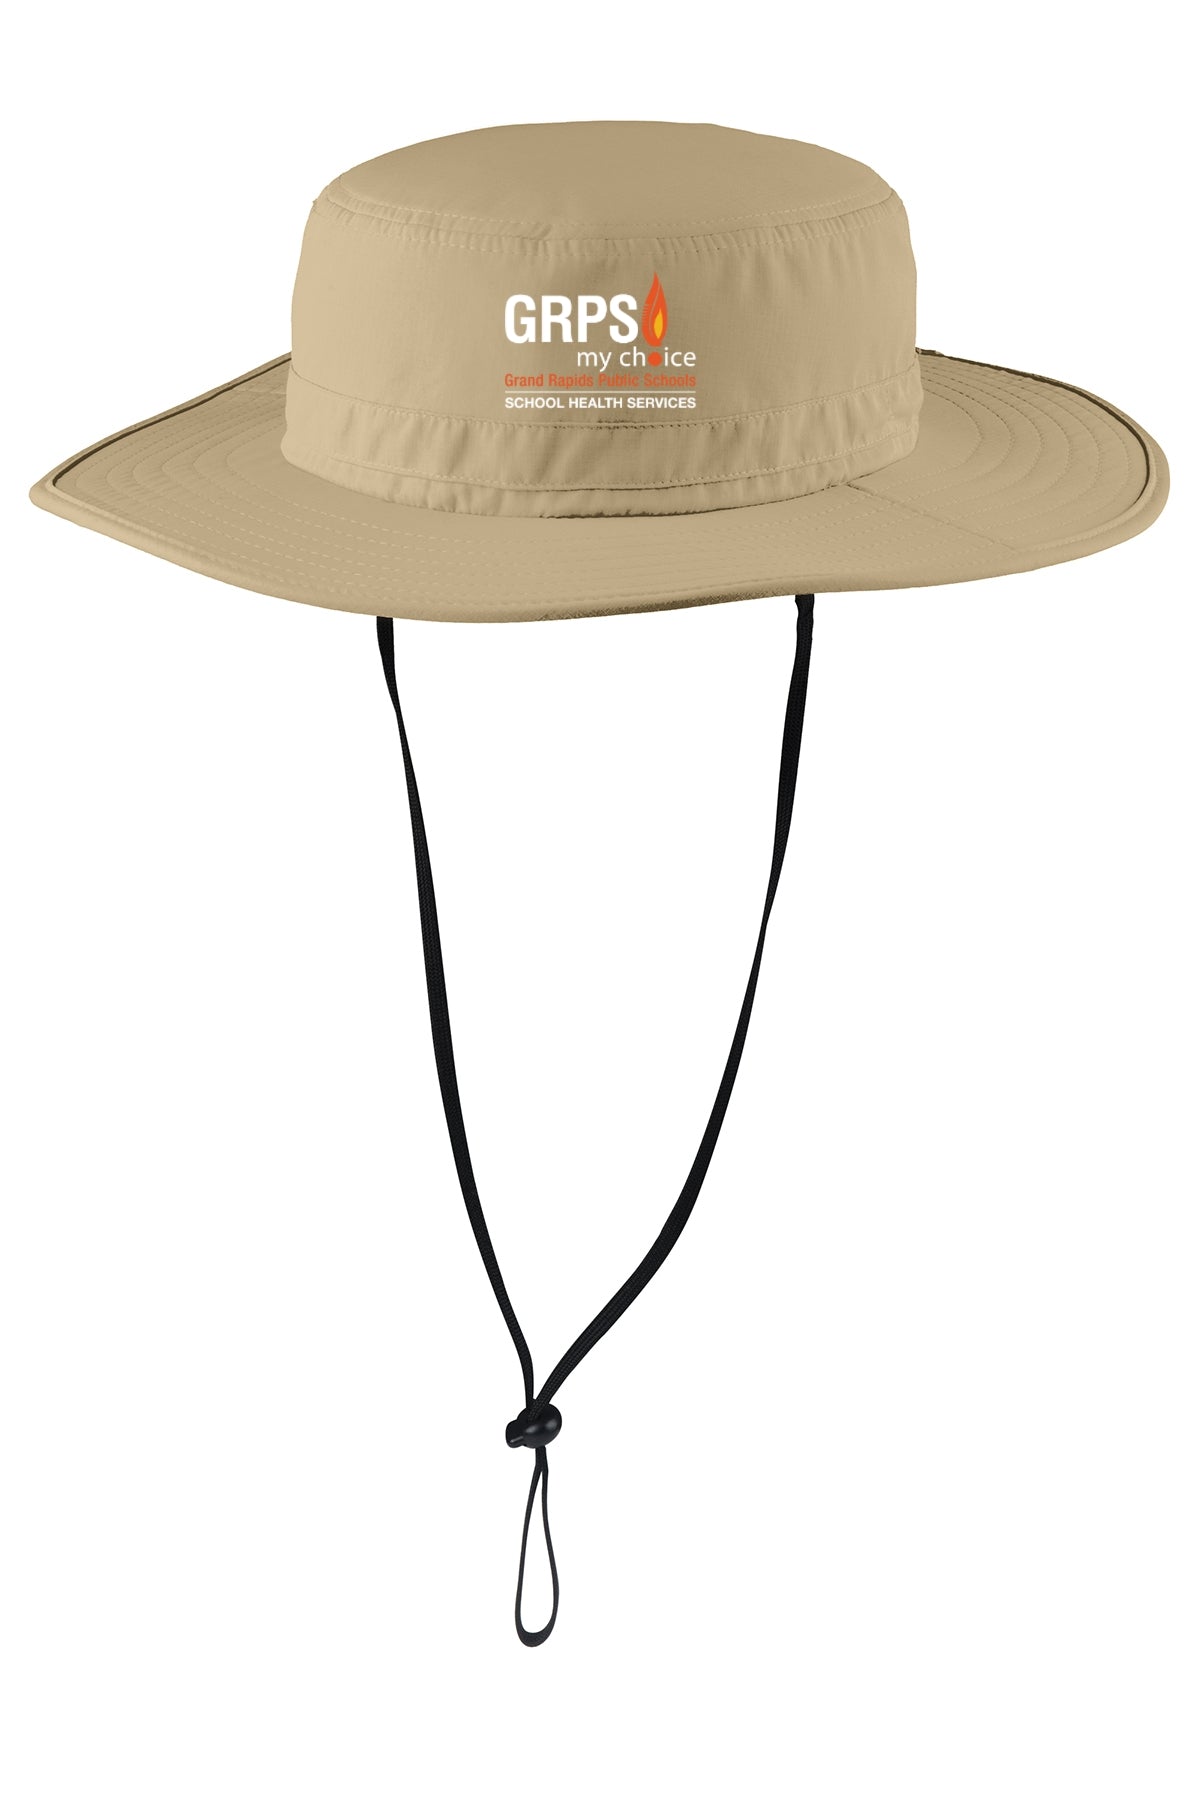 GRPS HEALTH SERVICES Outdoor Wide-Brim Hat